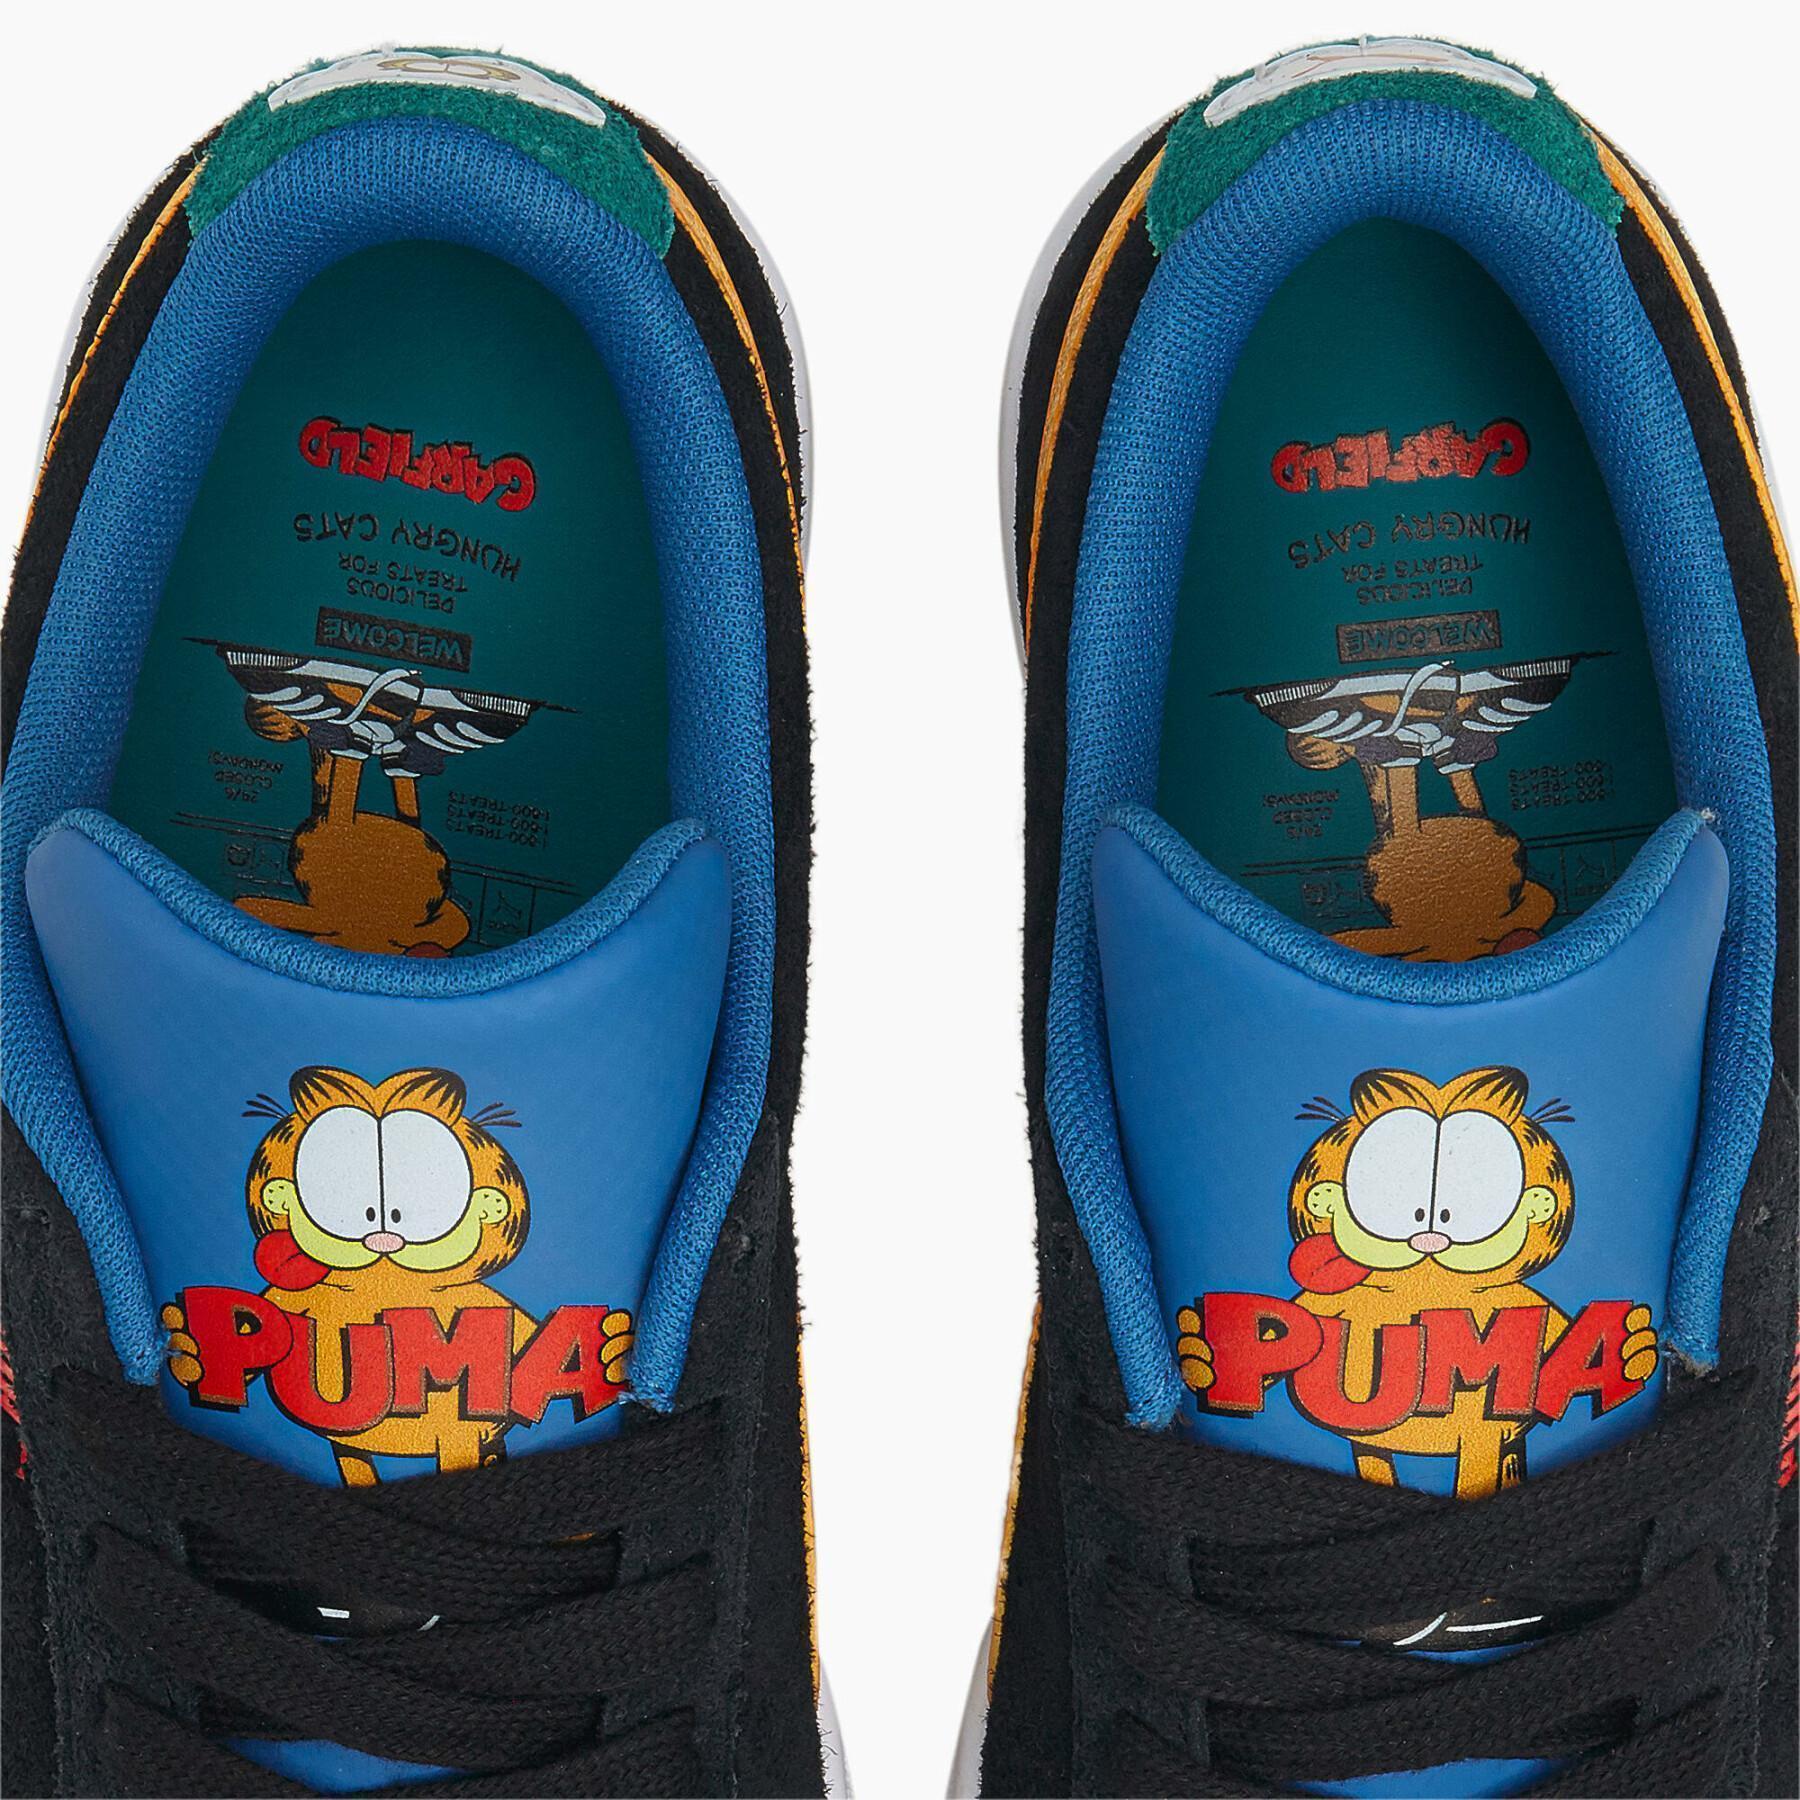 Children's sneakers Puma Suede Garfield